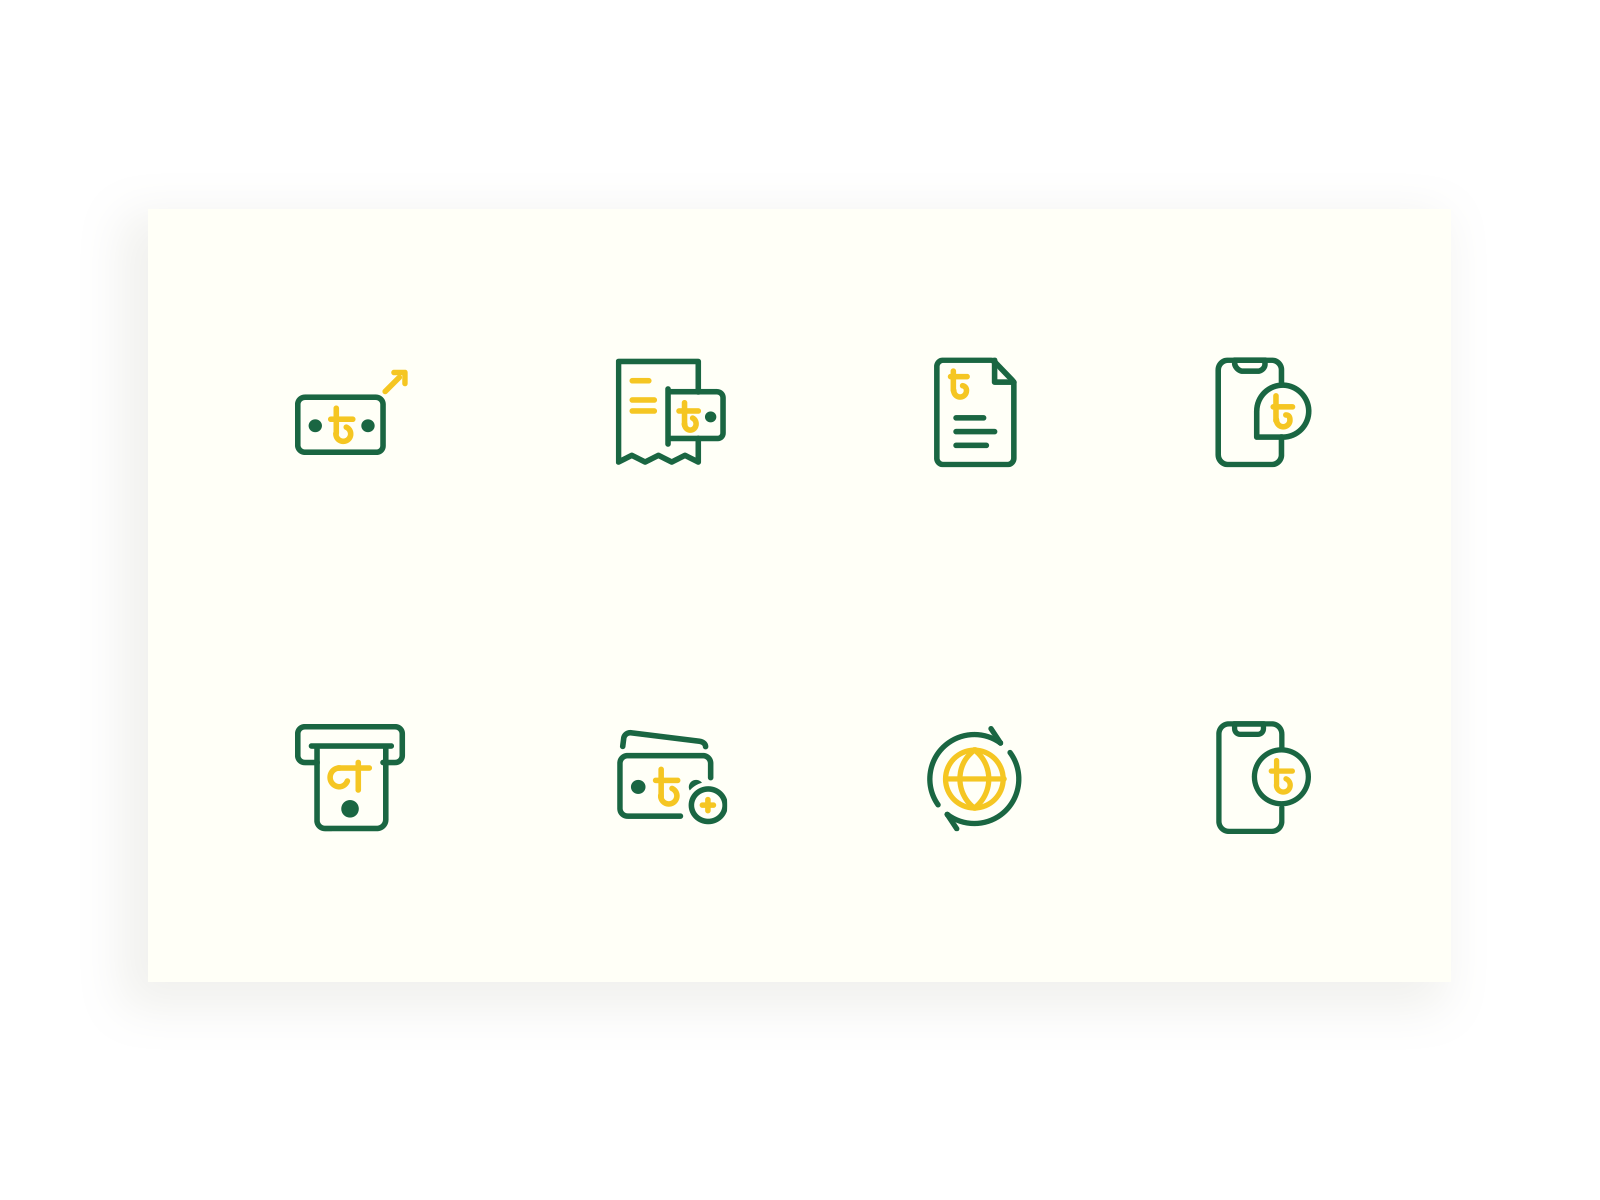 Custom Icon set designed for Upcoming wallet app